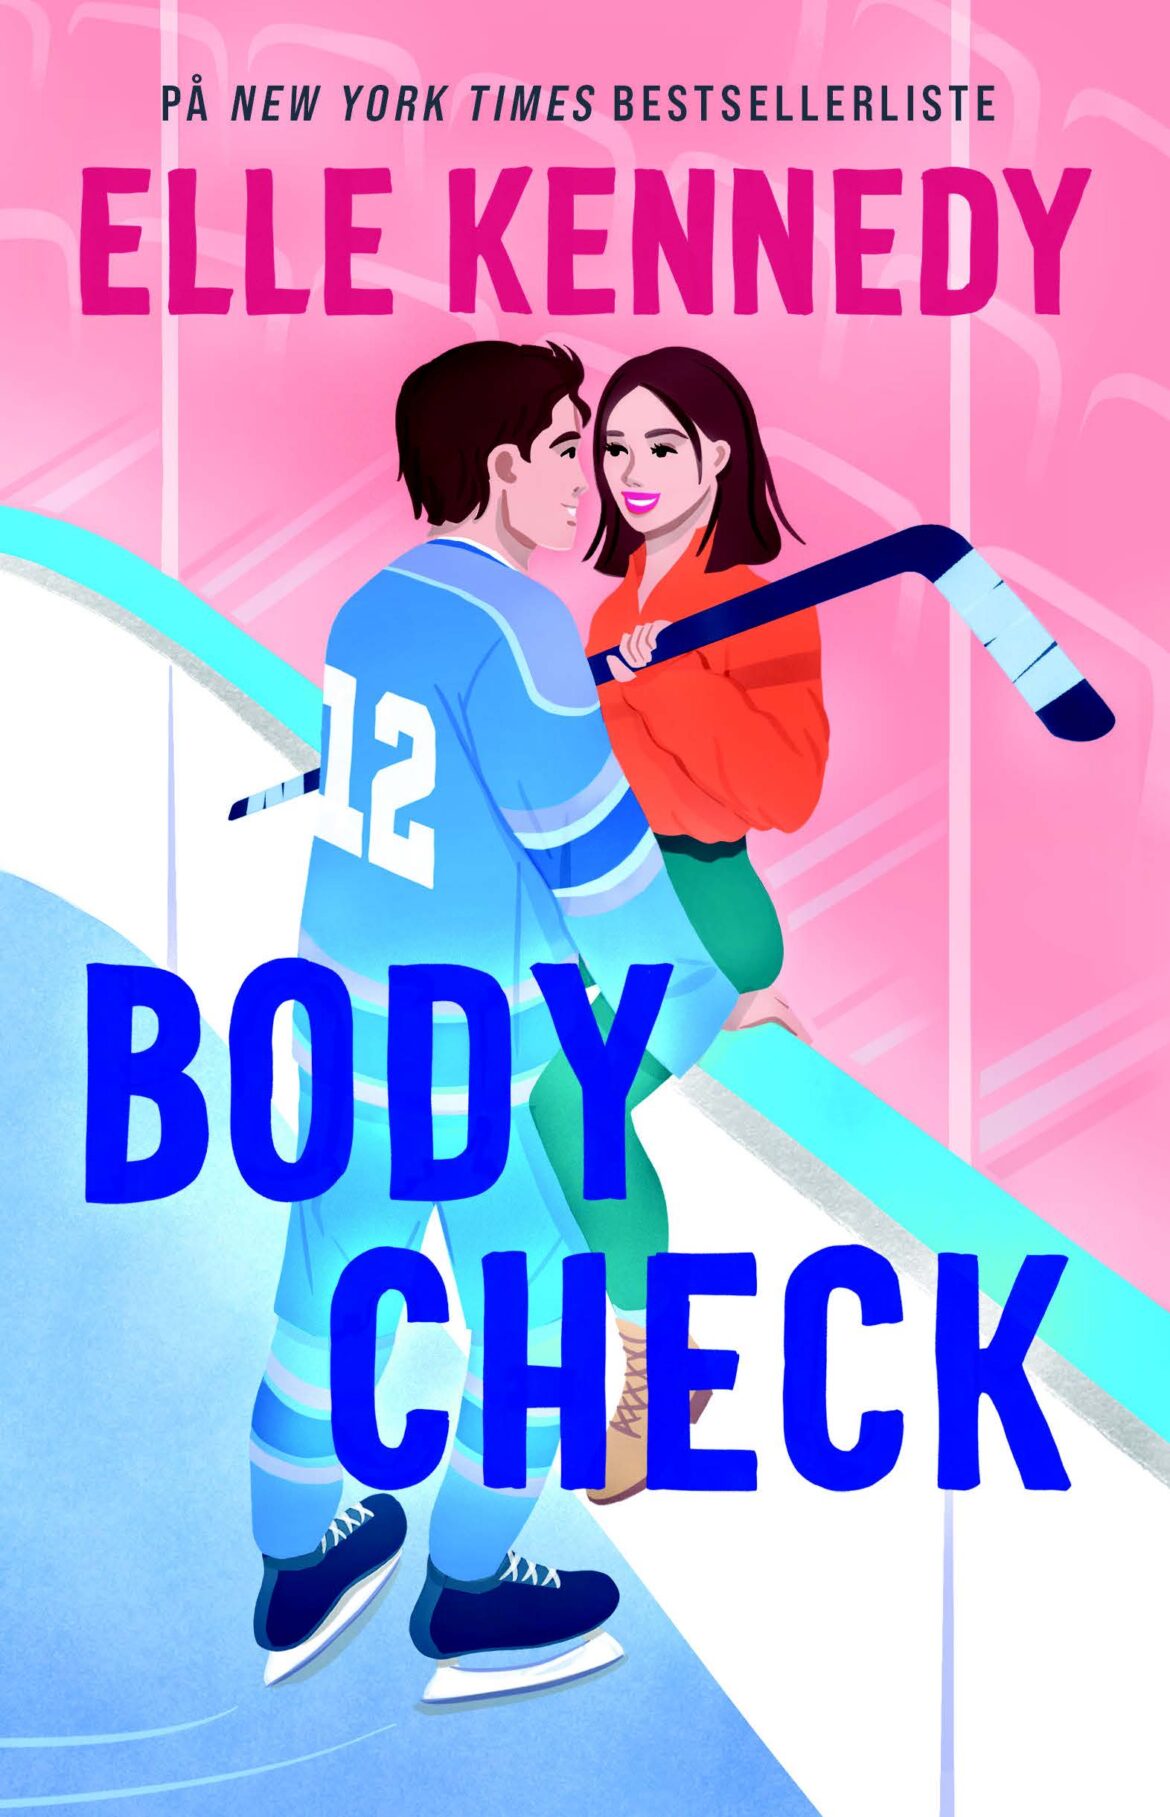 Den populære Body Check udkommer i ny version